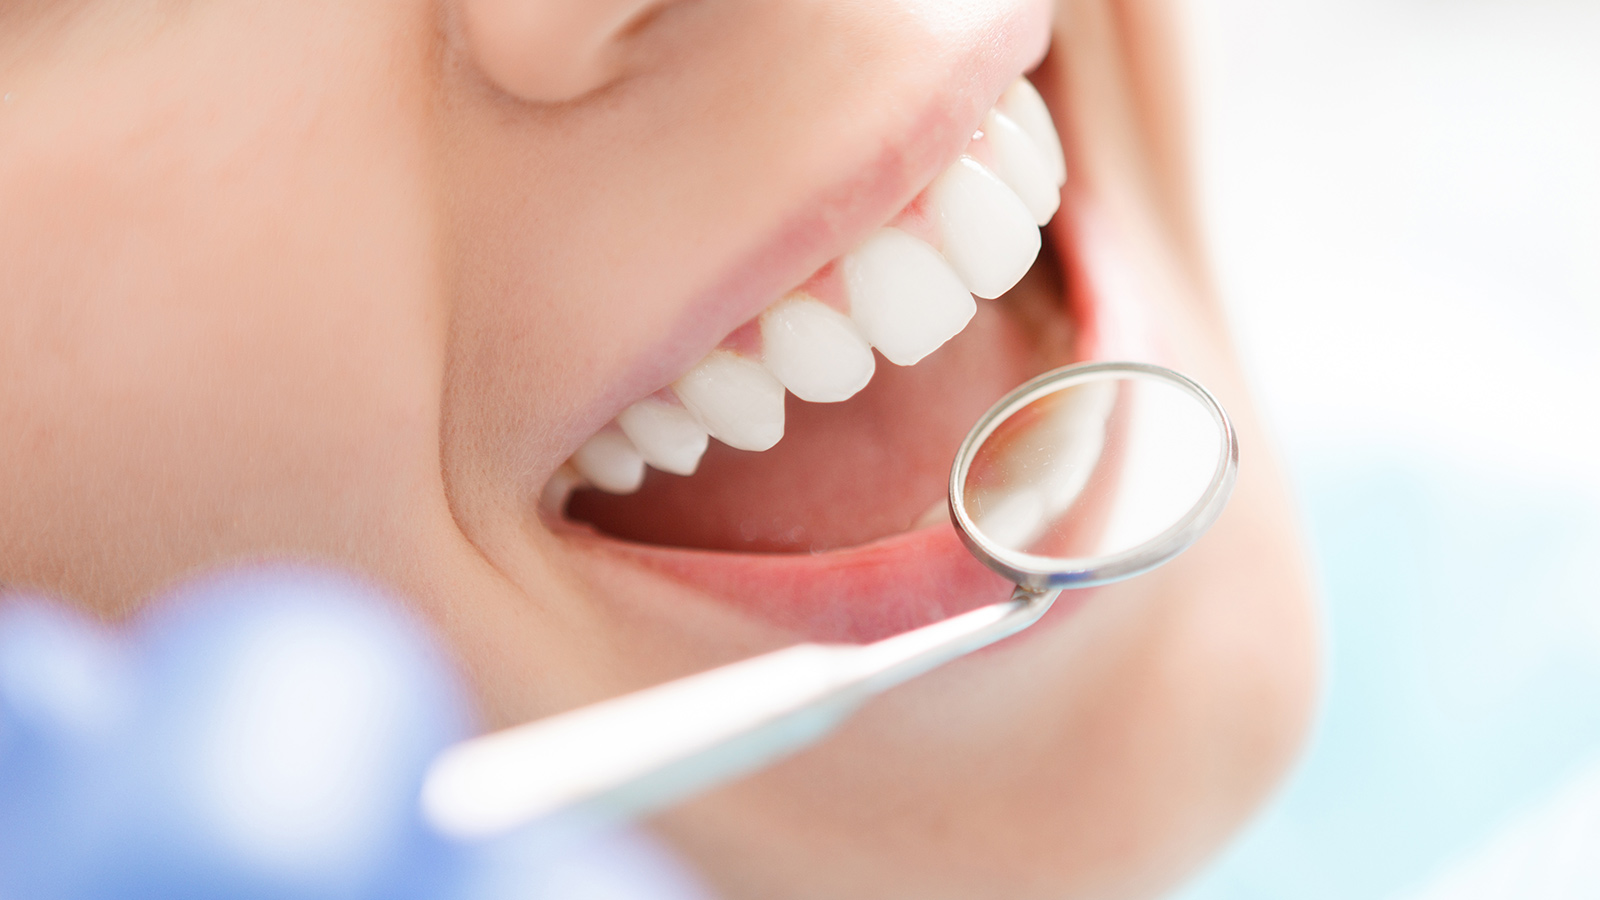 Teeth Whitening Services, Teeth Whitening 101